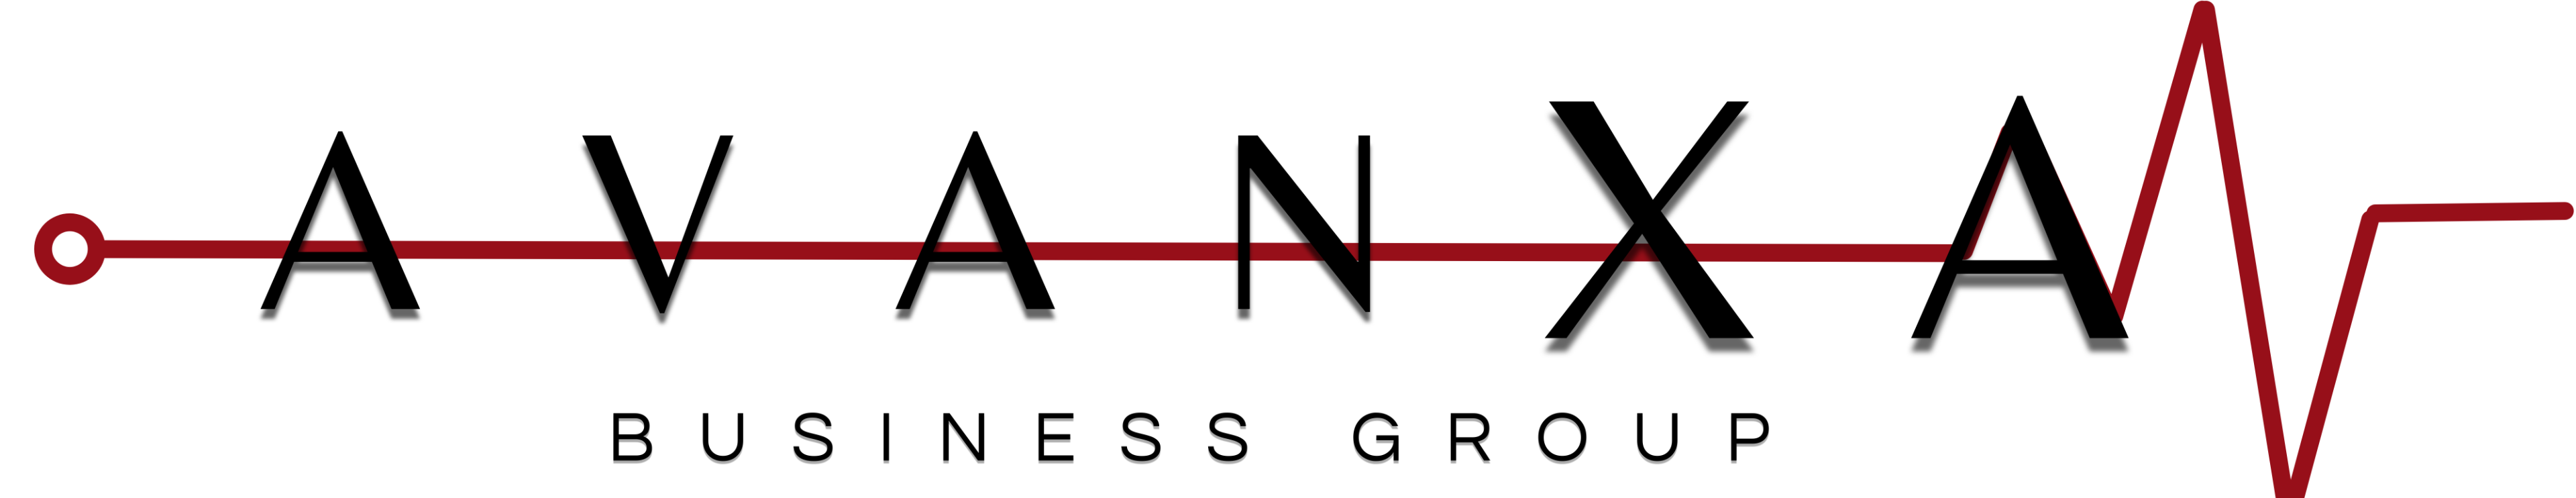 Avanxa Business Group 1